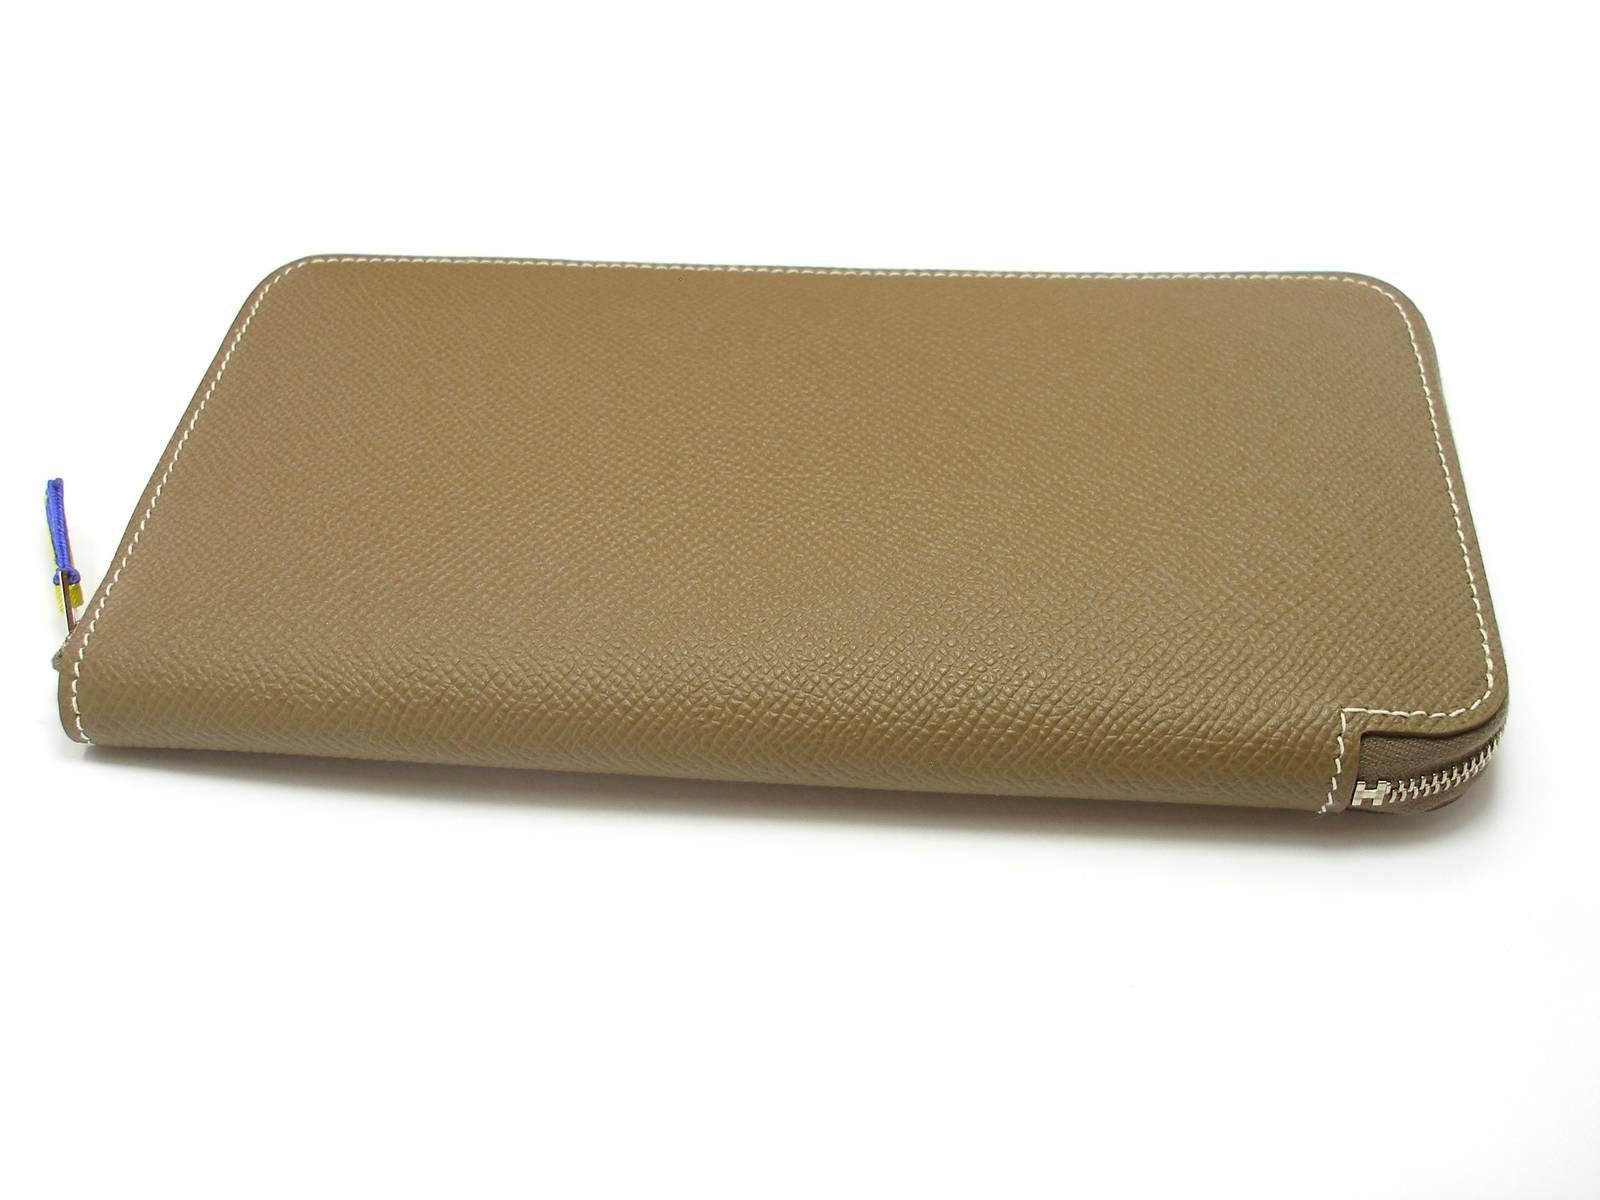 Women's or Men's Hermes classic wallet Large Size Etoupe Leather and Sangles bleu Electrique 